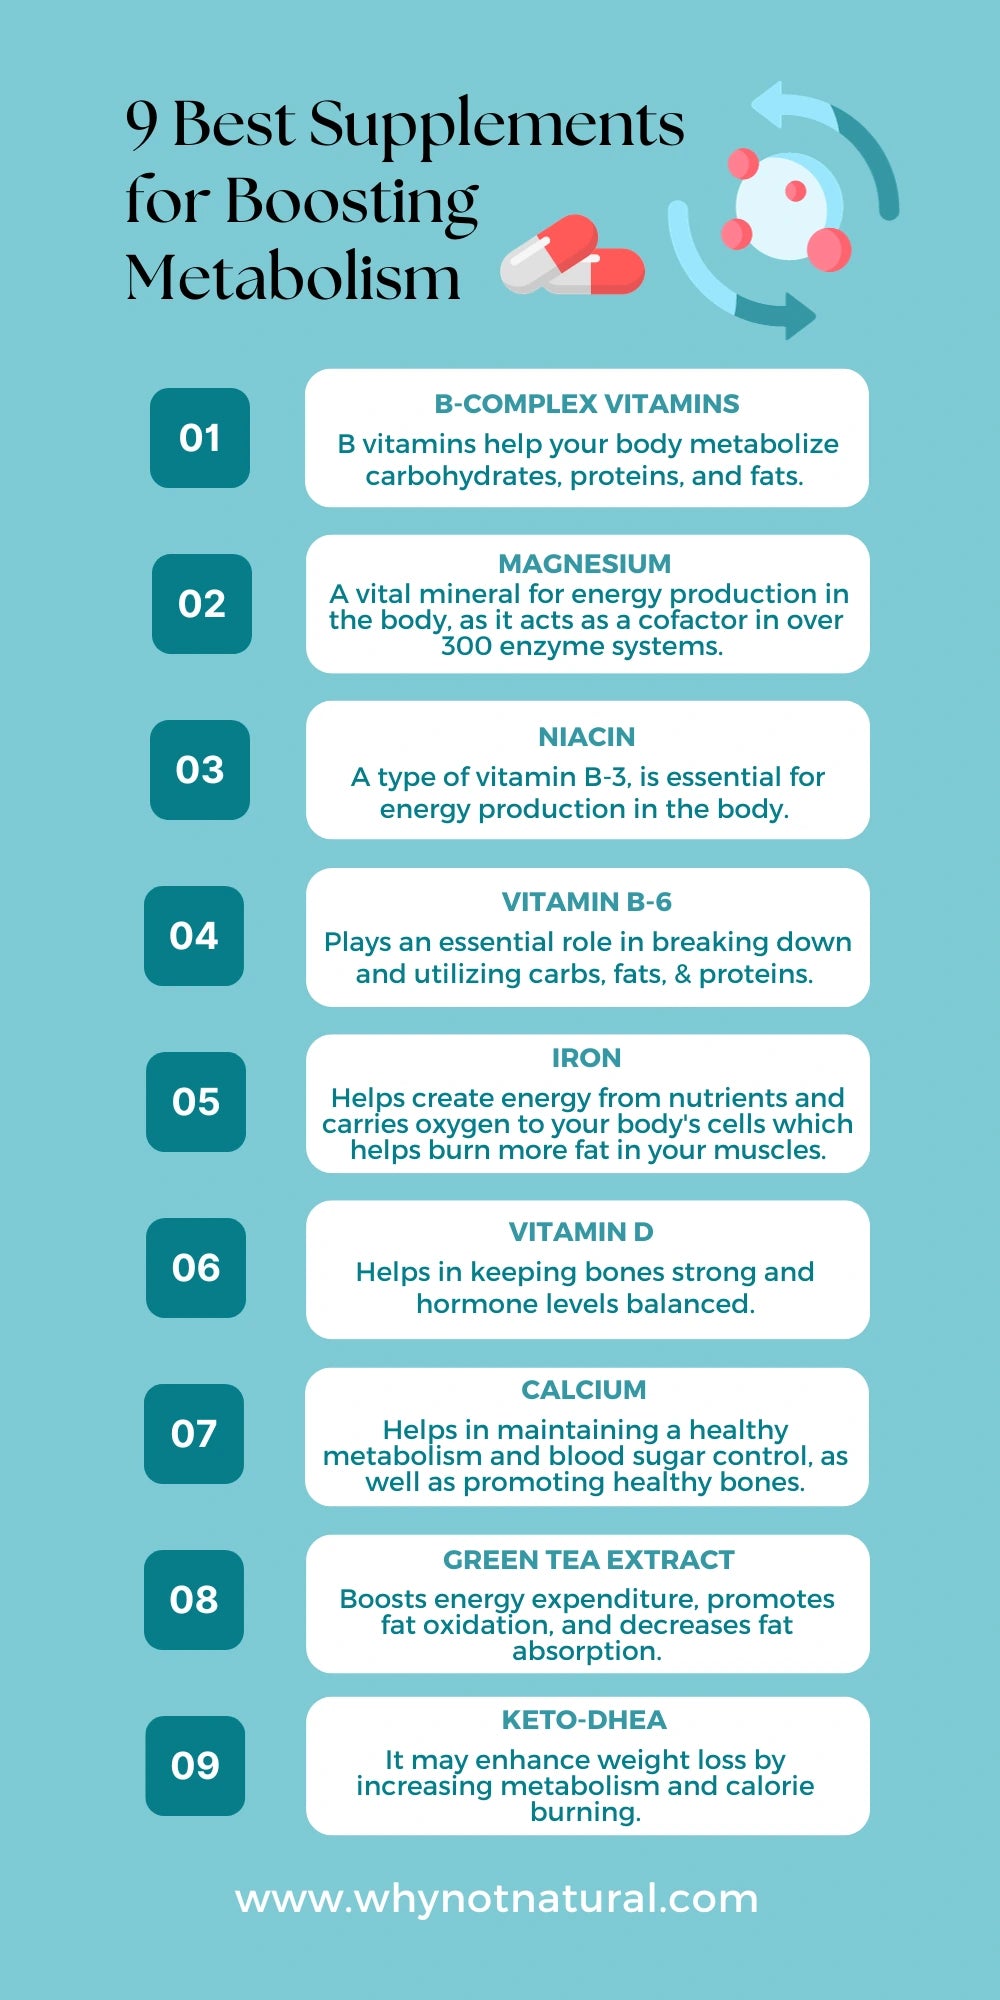 9 Best Supplements for Boosting Metabolism